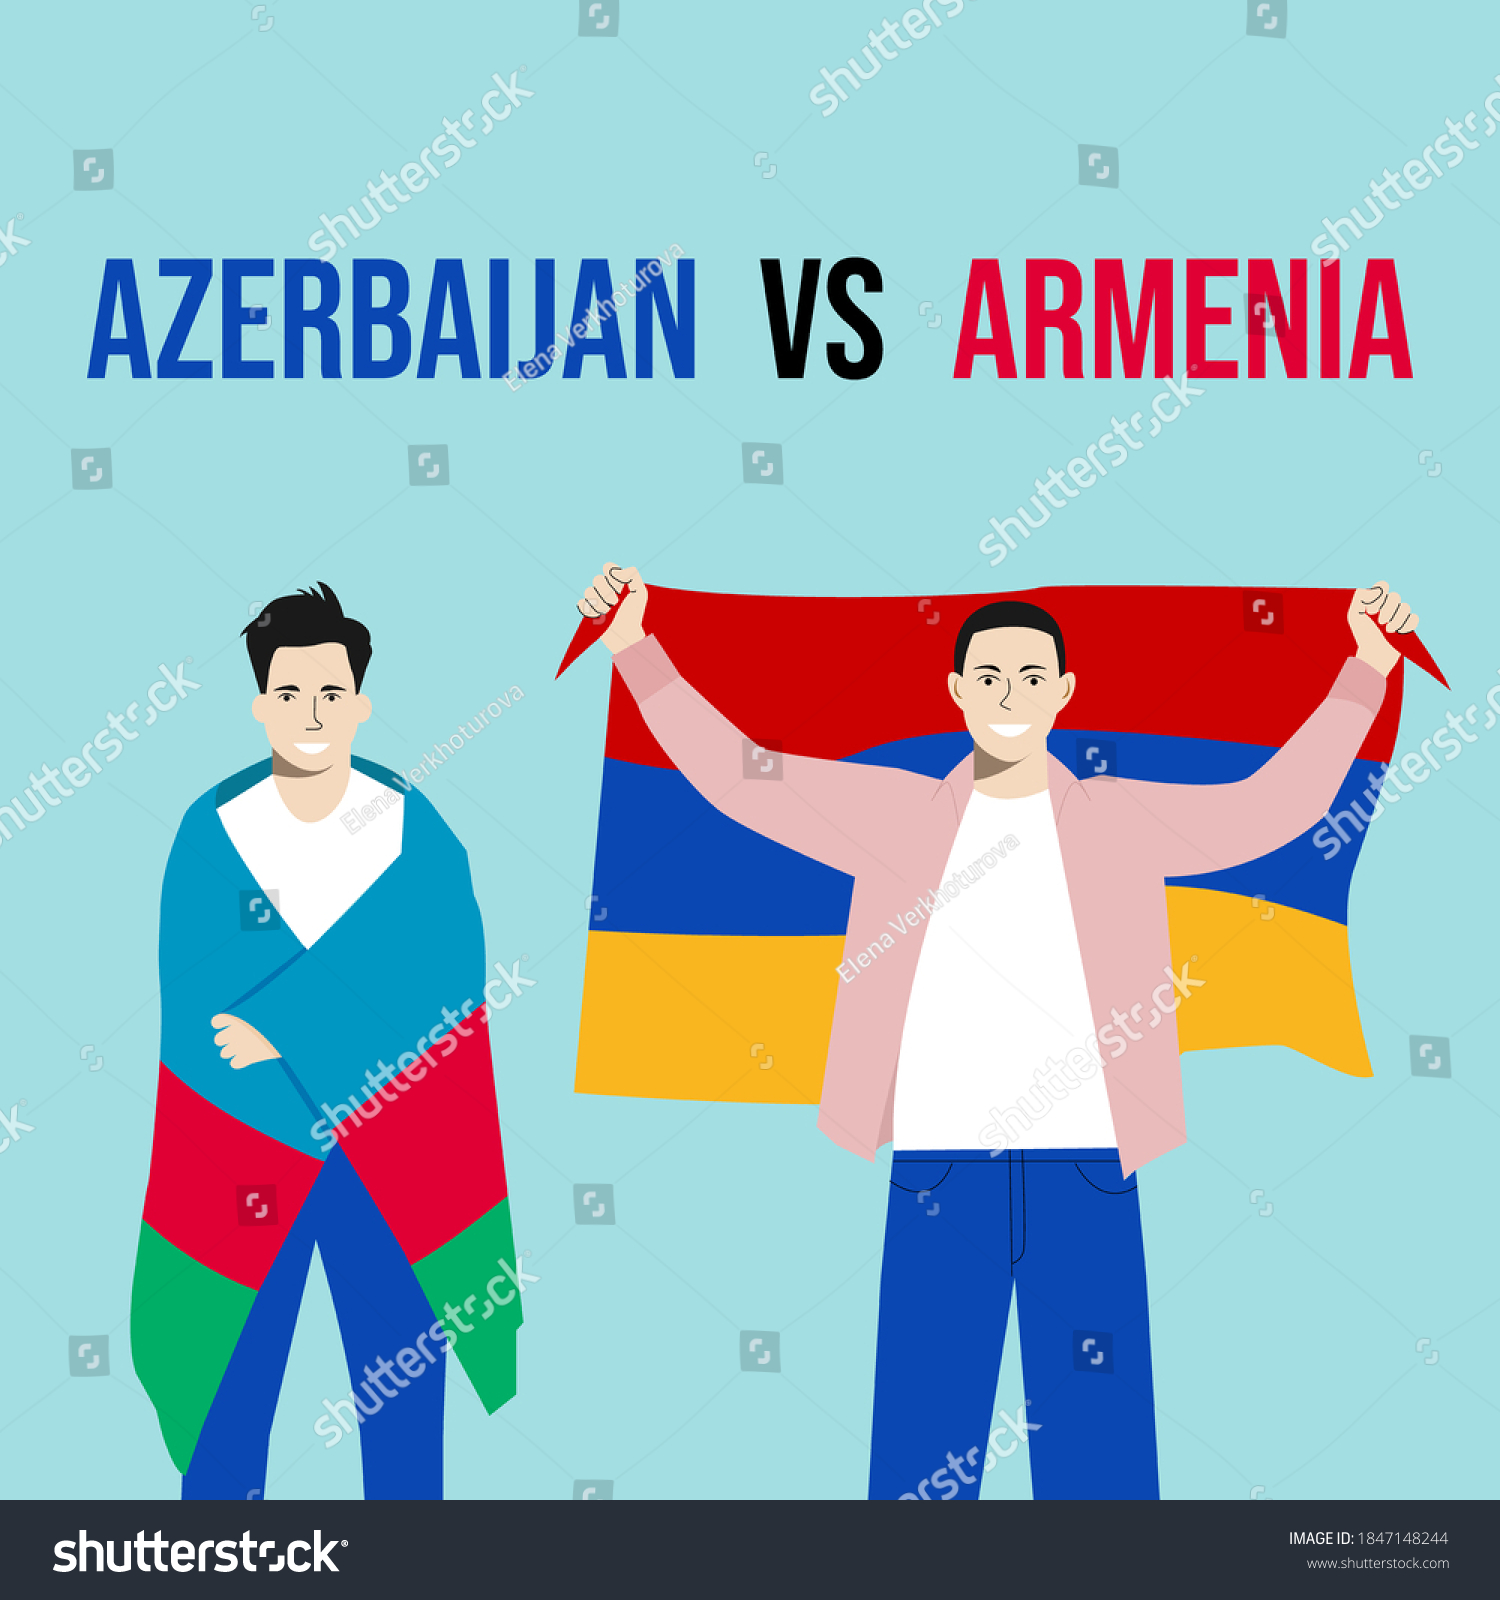 Armenia vs azerbaijan war background. International clash symbol armenia vs azerbaijan. Couple mans with flags of Armenia and Azerbaijan is a symbol of friendship, partnership, stop war #1847148244